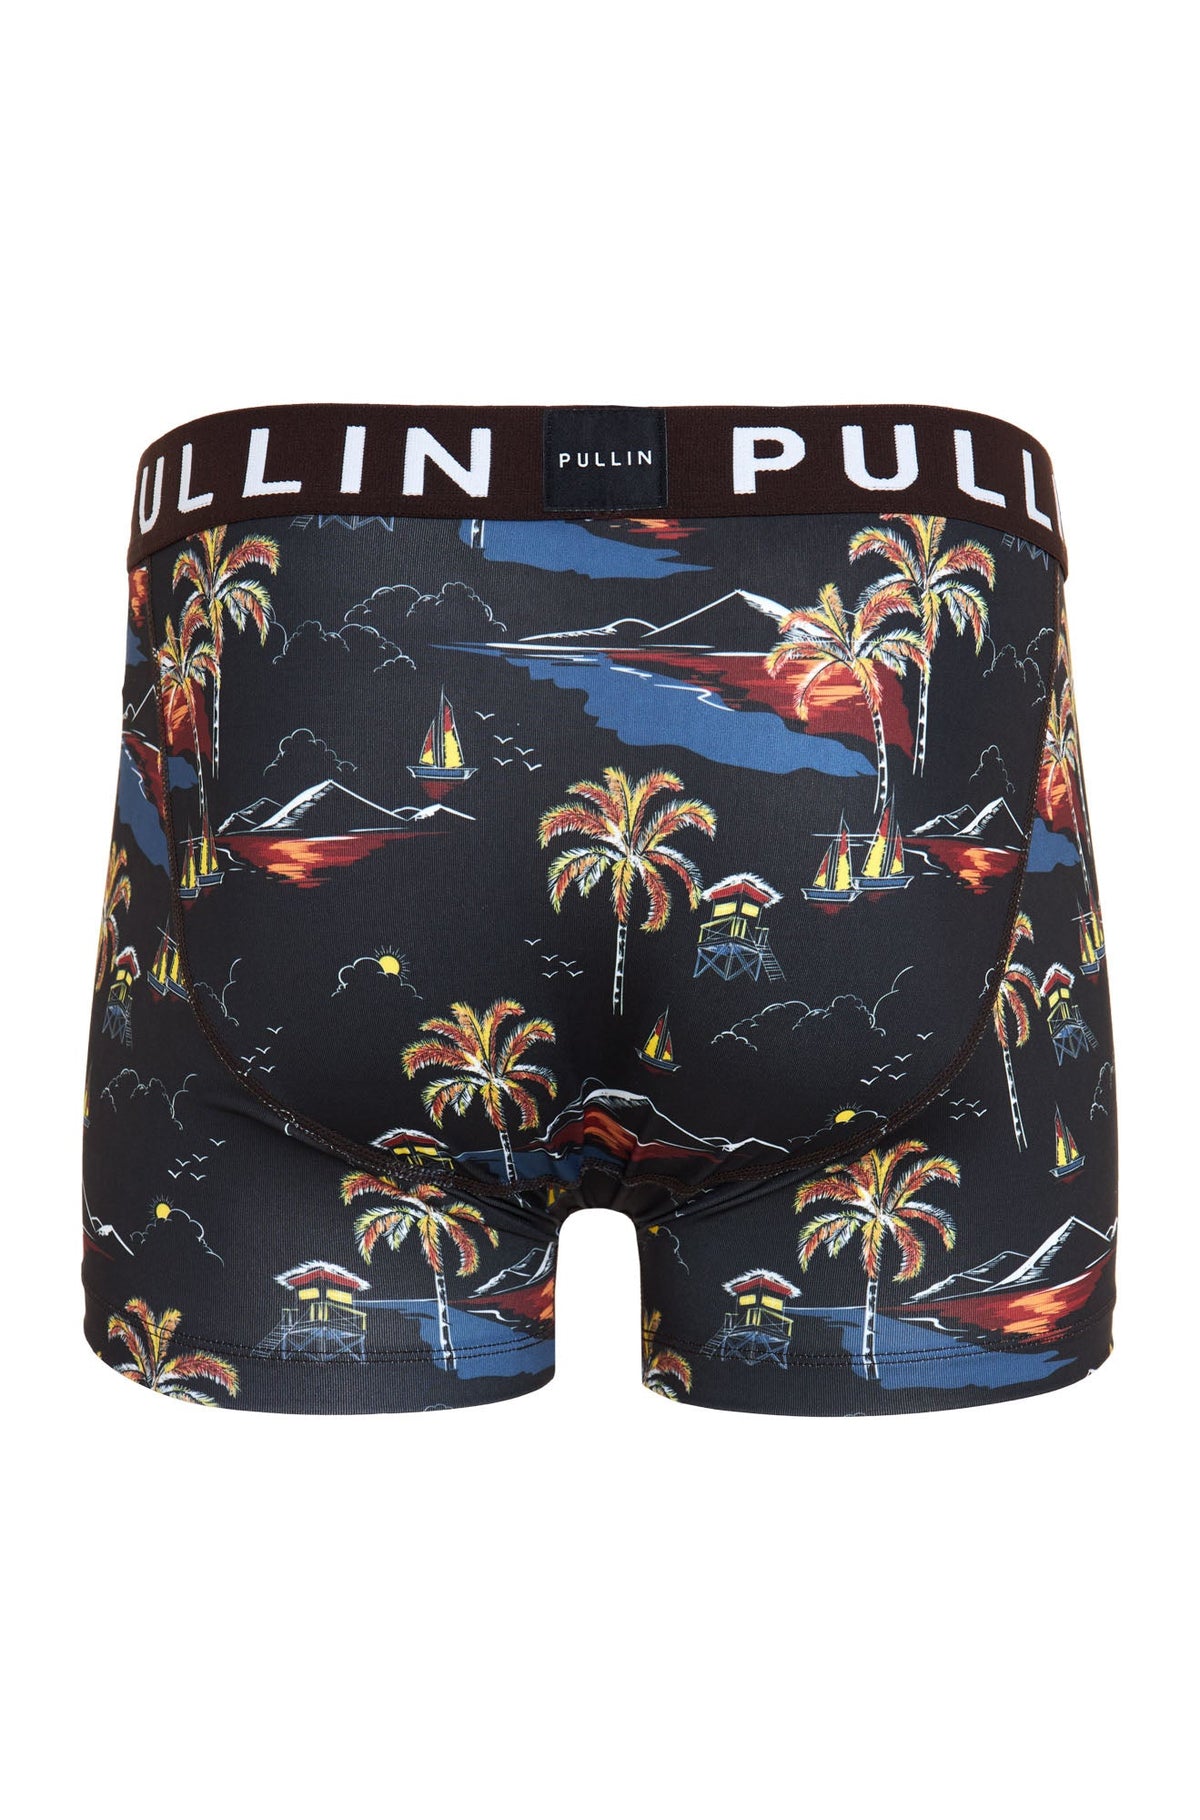 Men's underwear by Pullin, MAS ELEMENT